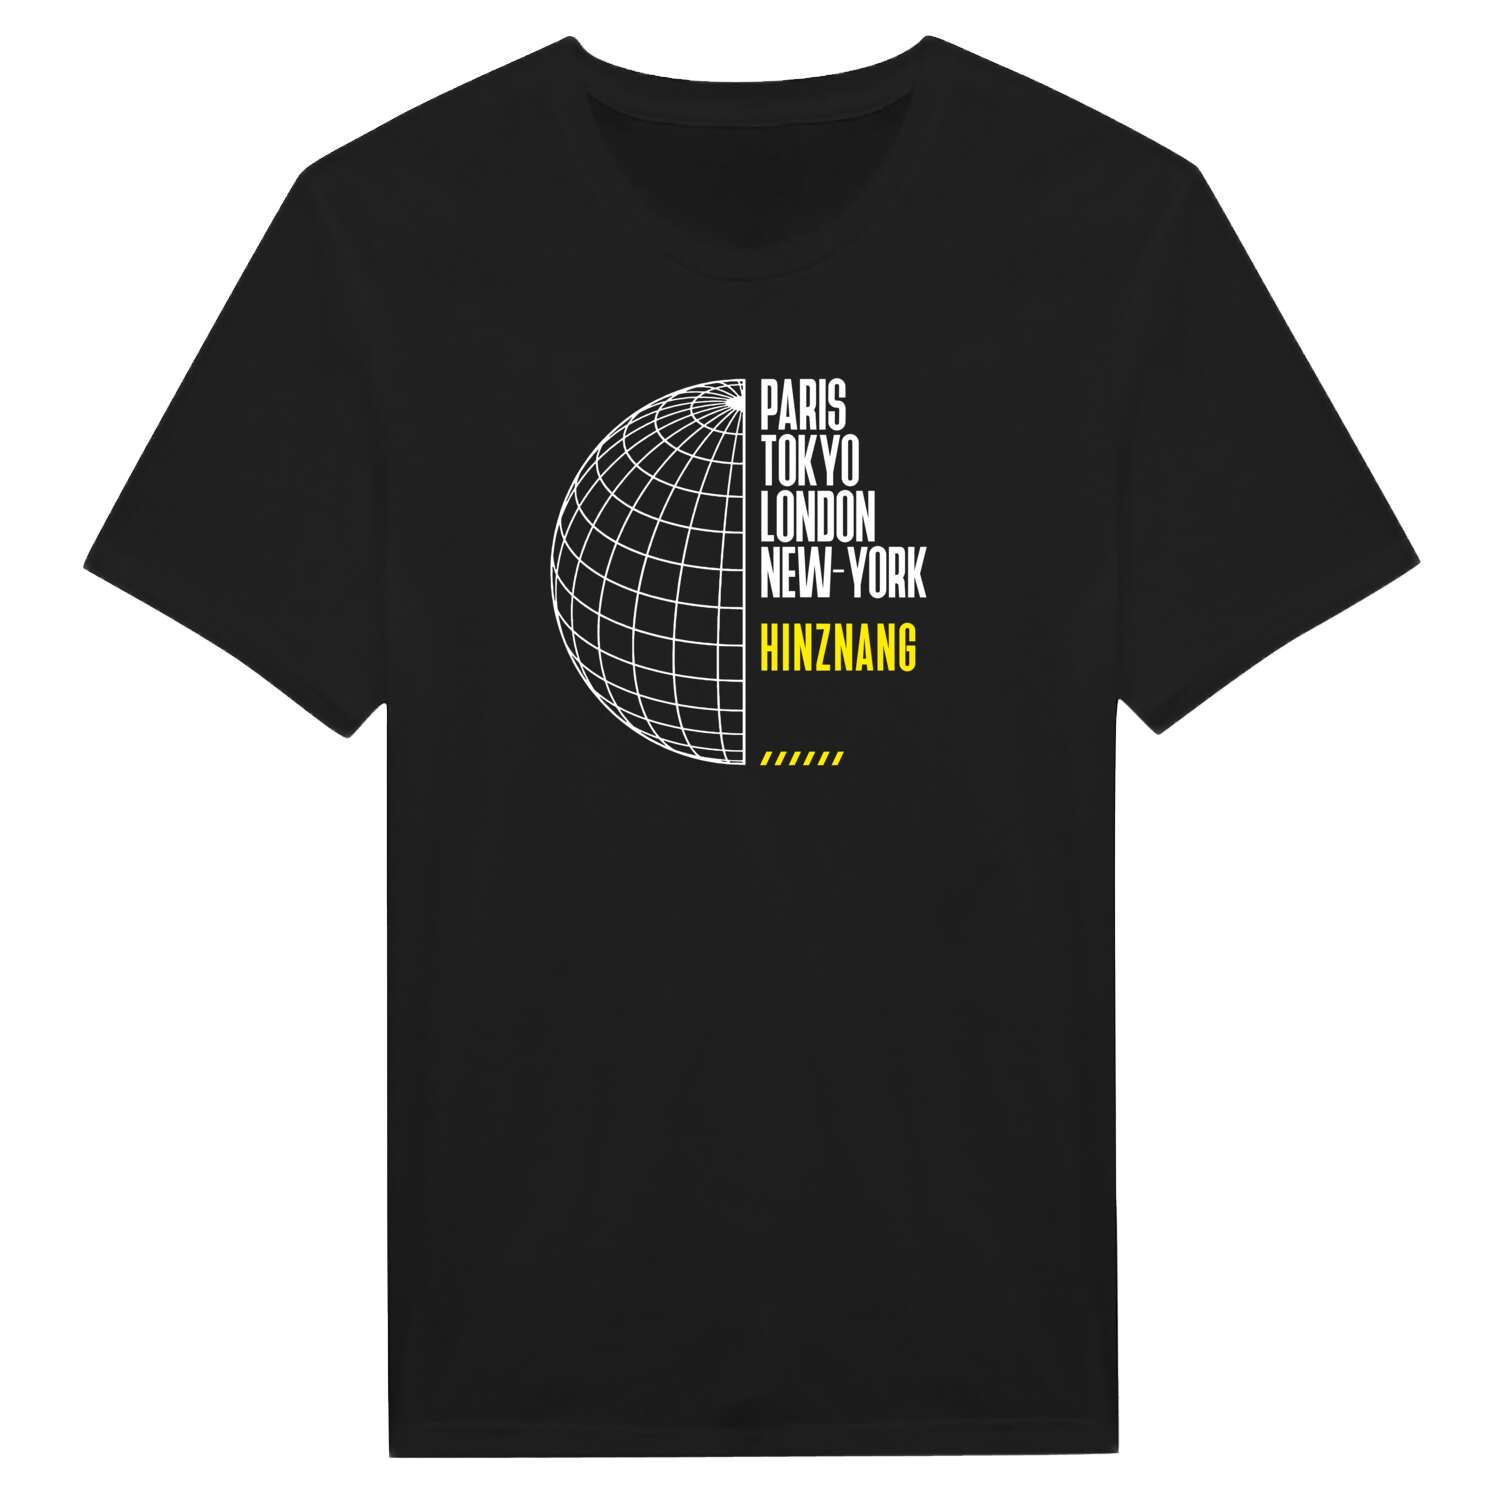 Hinznang T-Shirt »Paris Tokyo London«